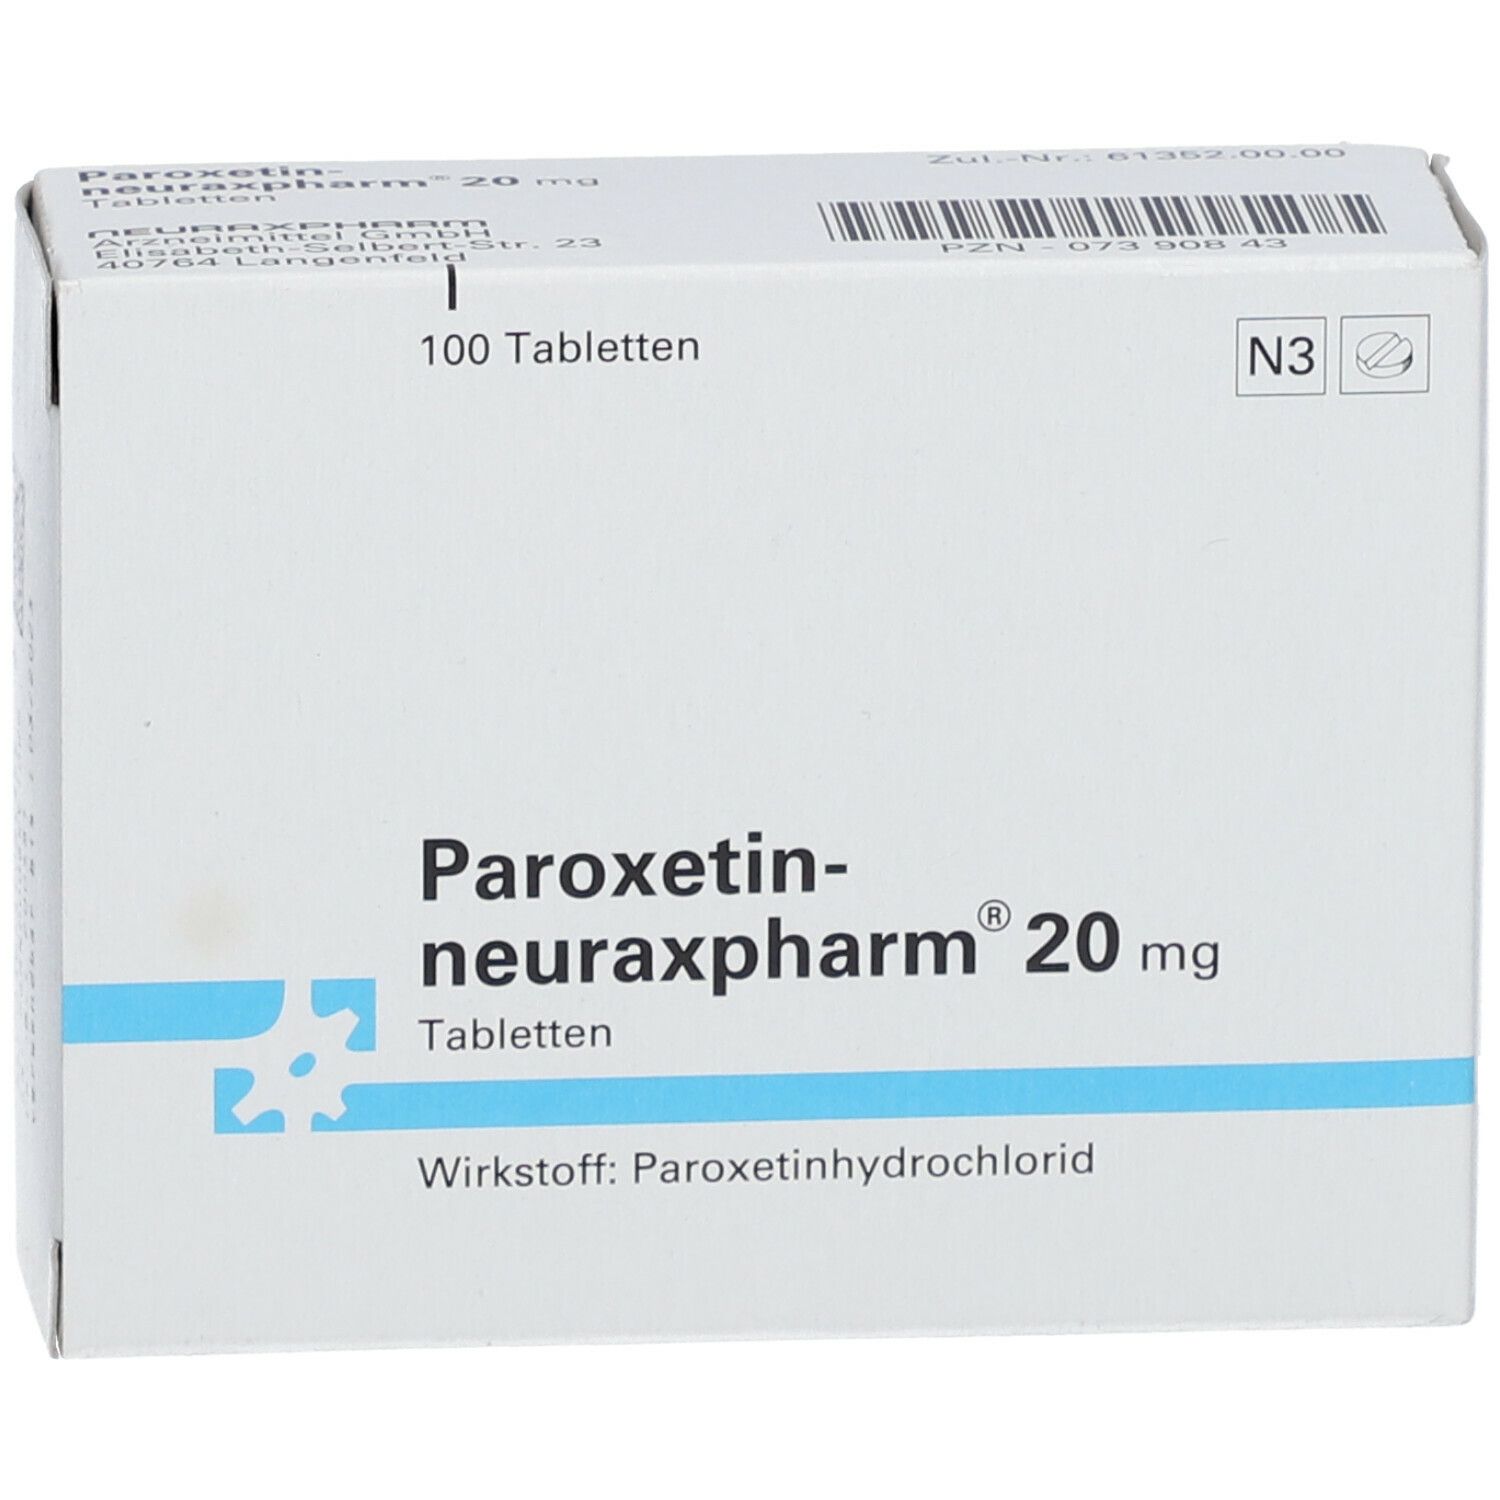 Paroxetin-neuraxpharm® 20 mg